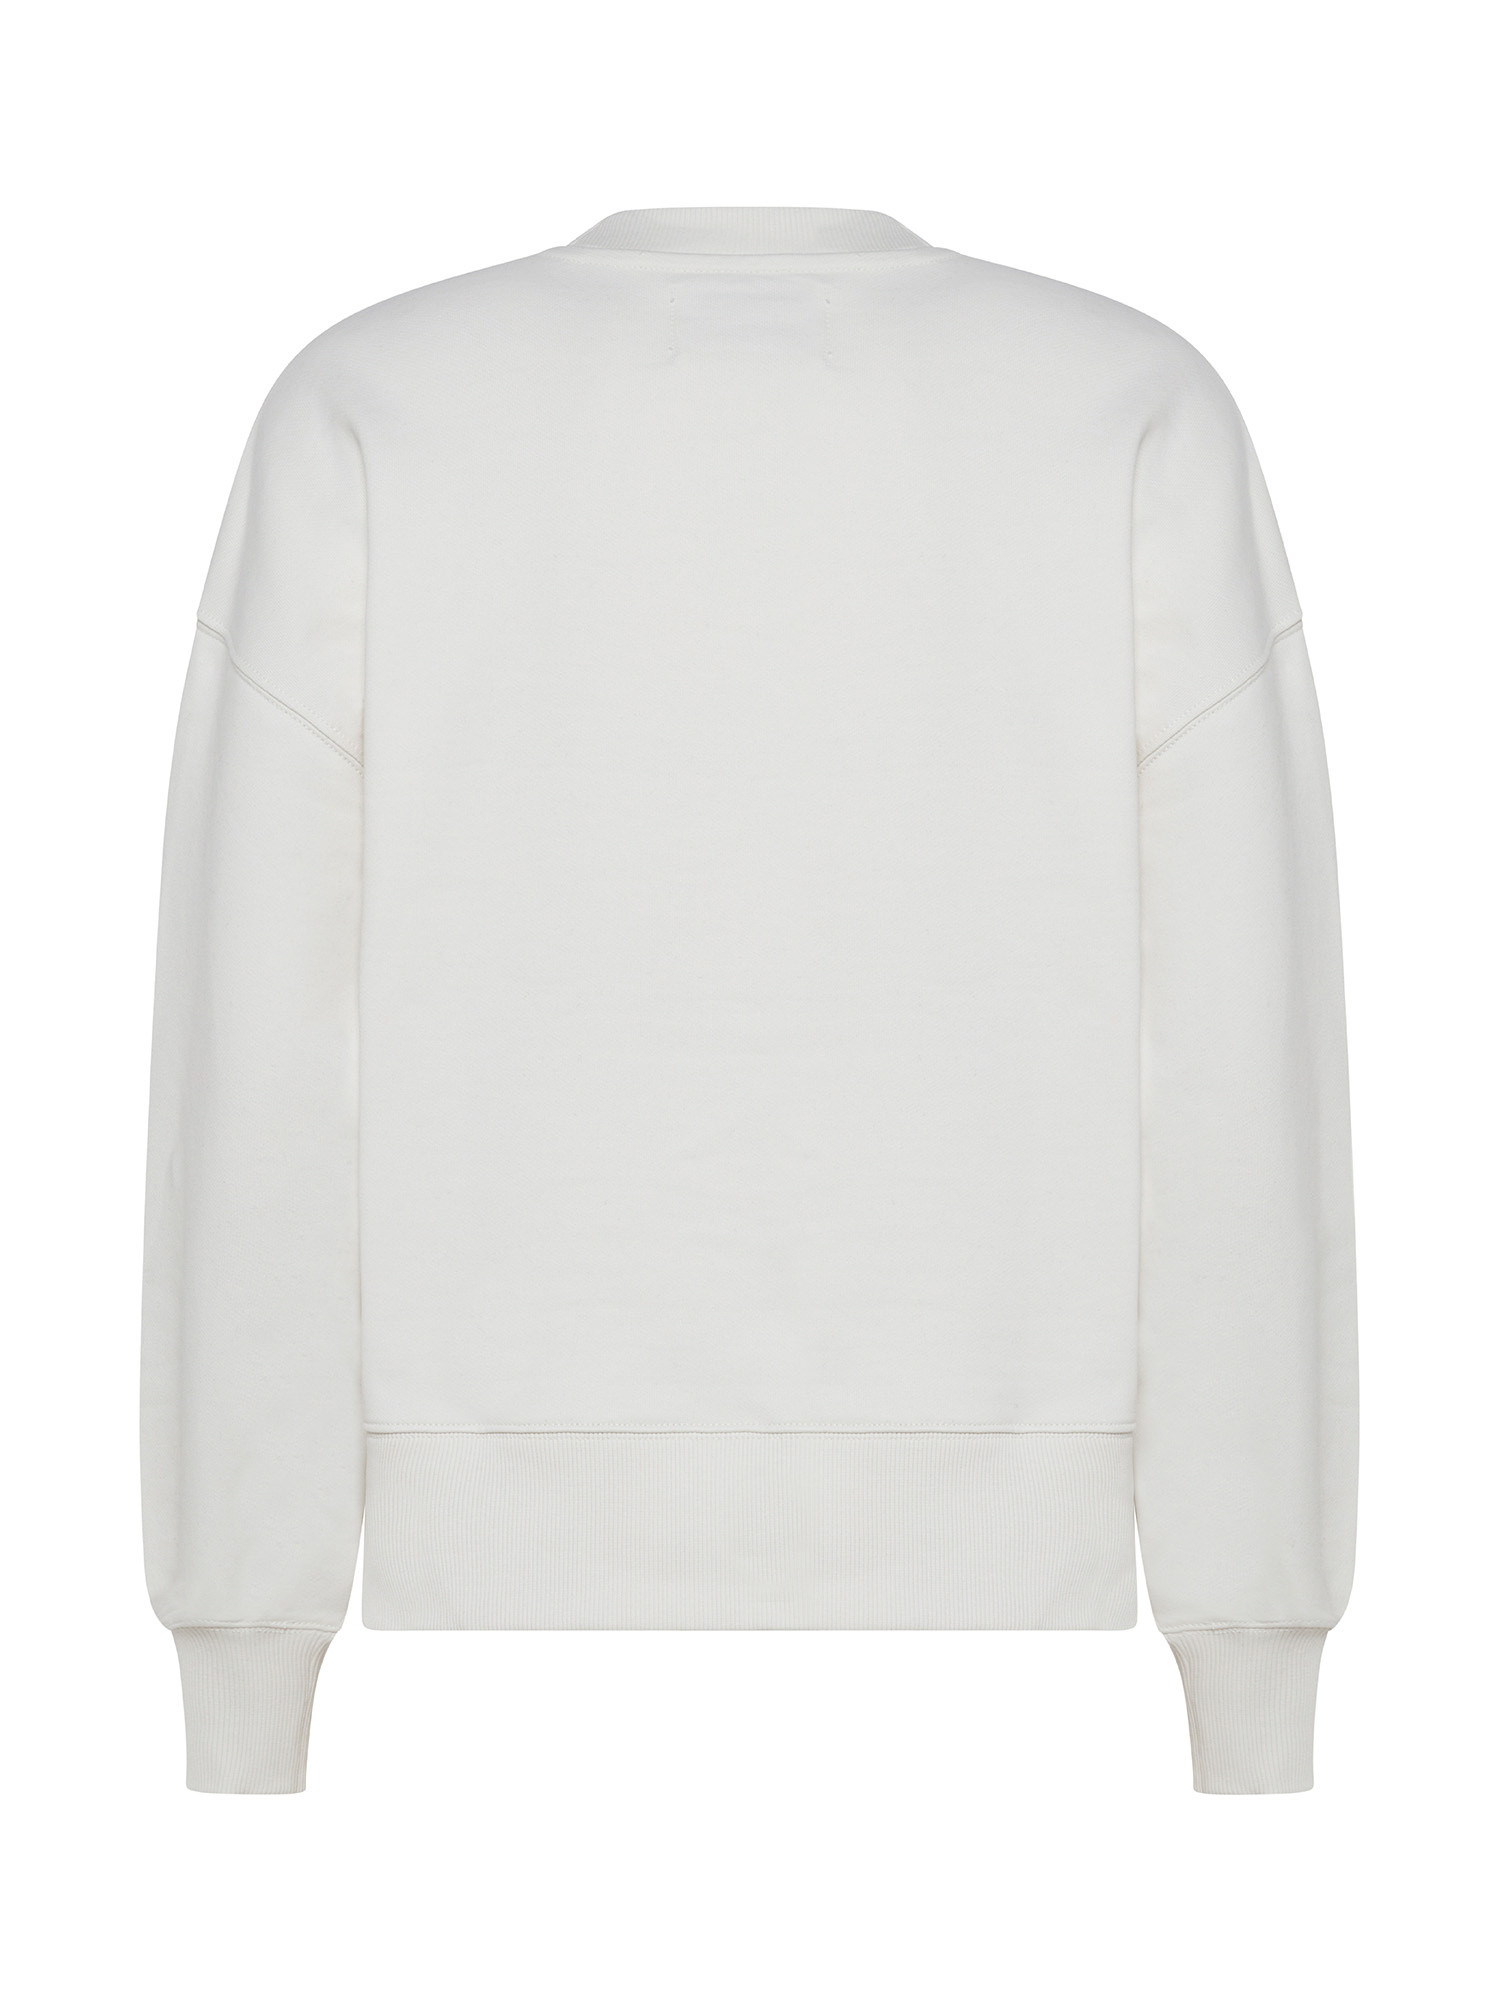 Calvin Klein Jeans - Felpa in cotone con logo, Bianco avorio, large image number 1